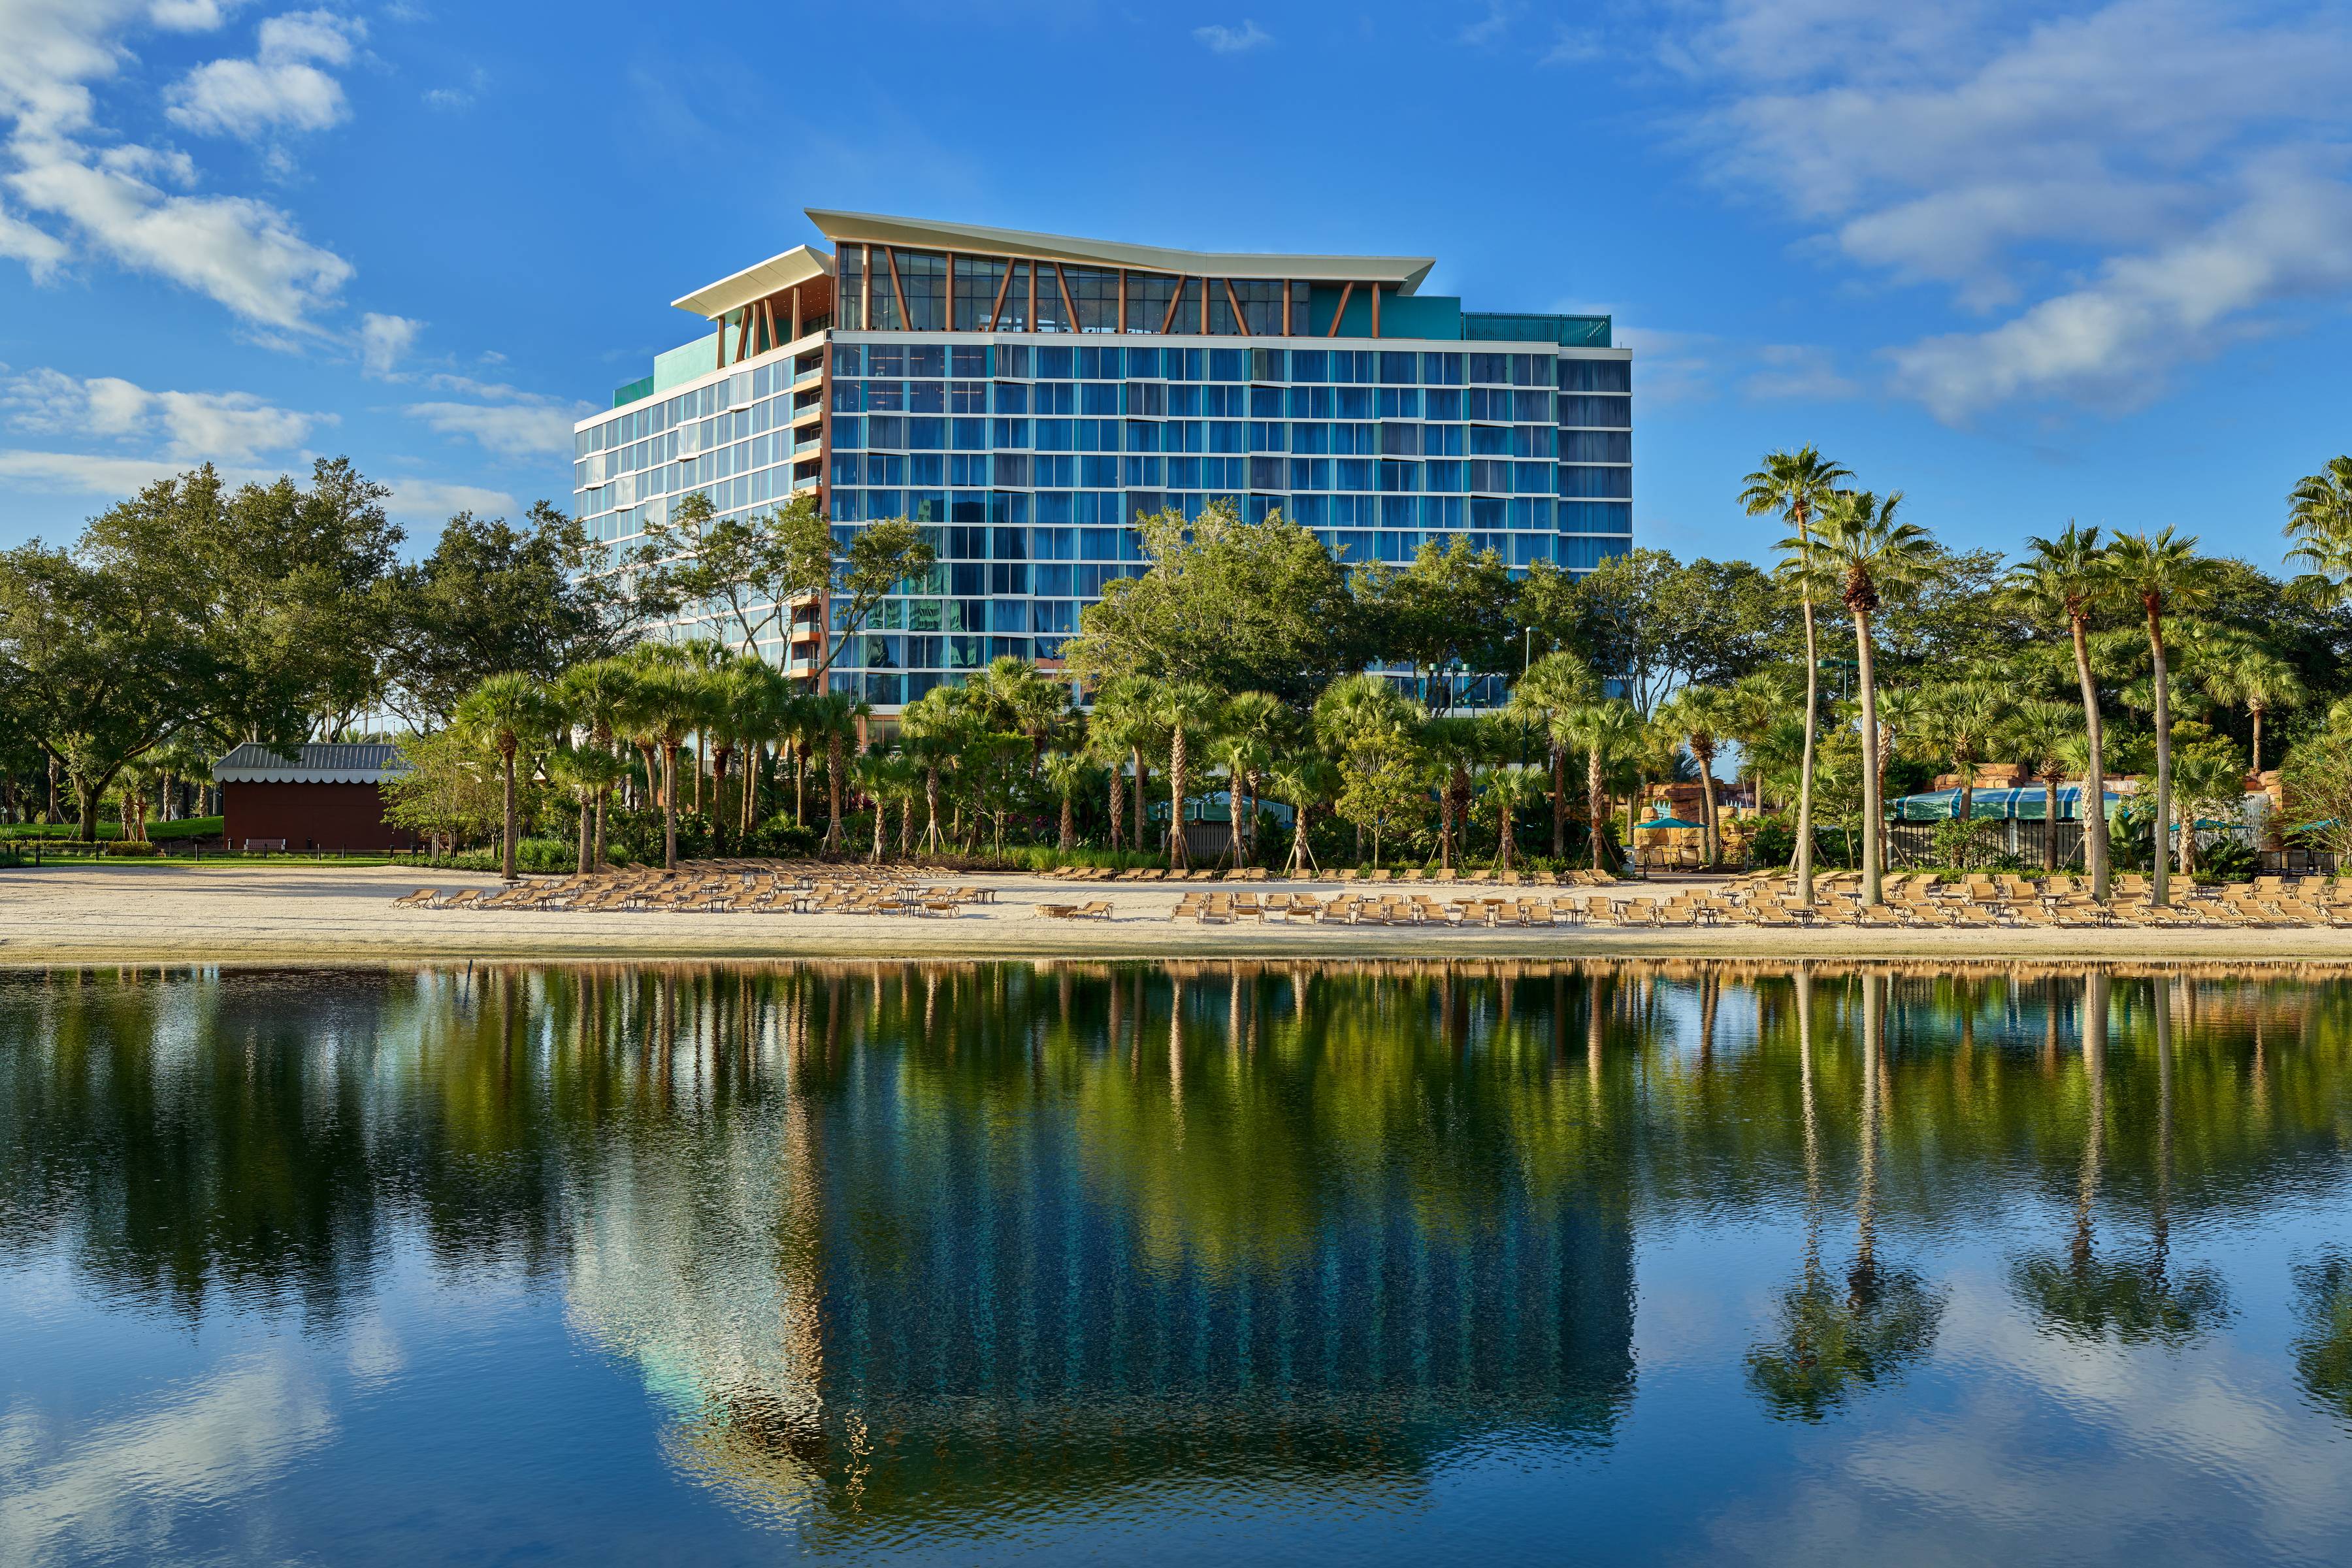 New Walt Disney World Swan Reserve hotel now open